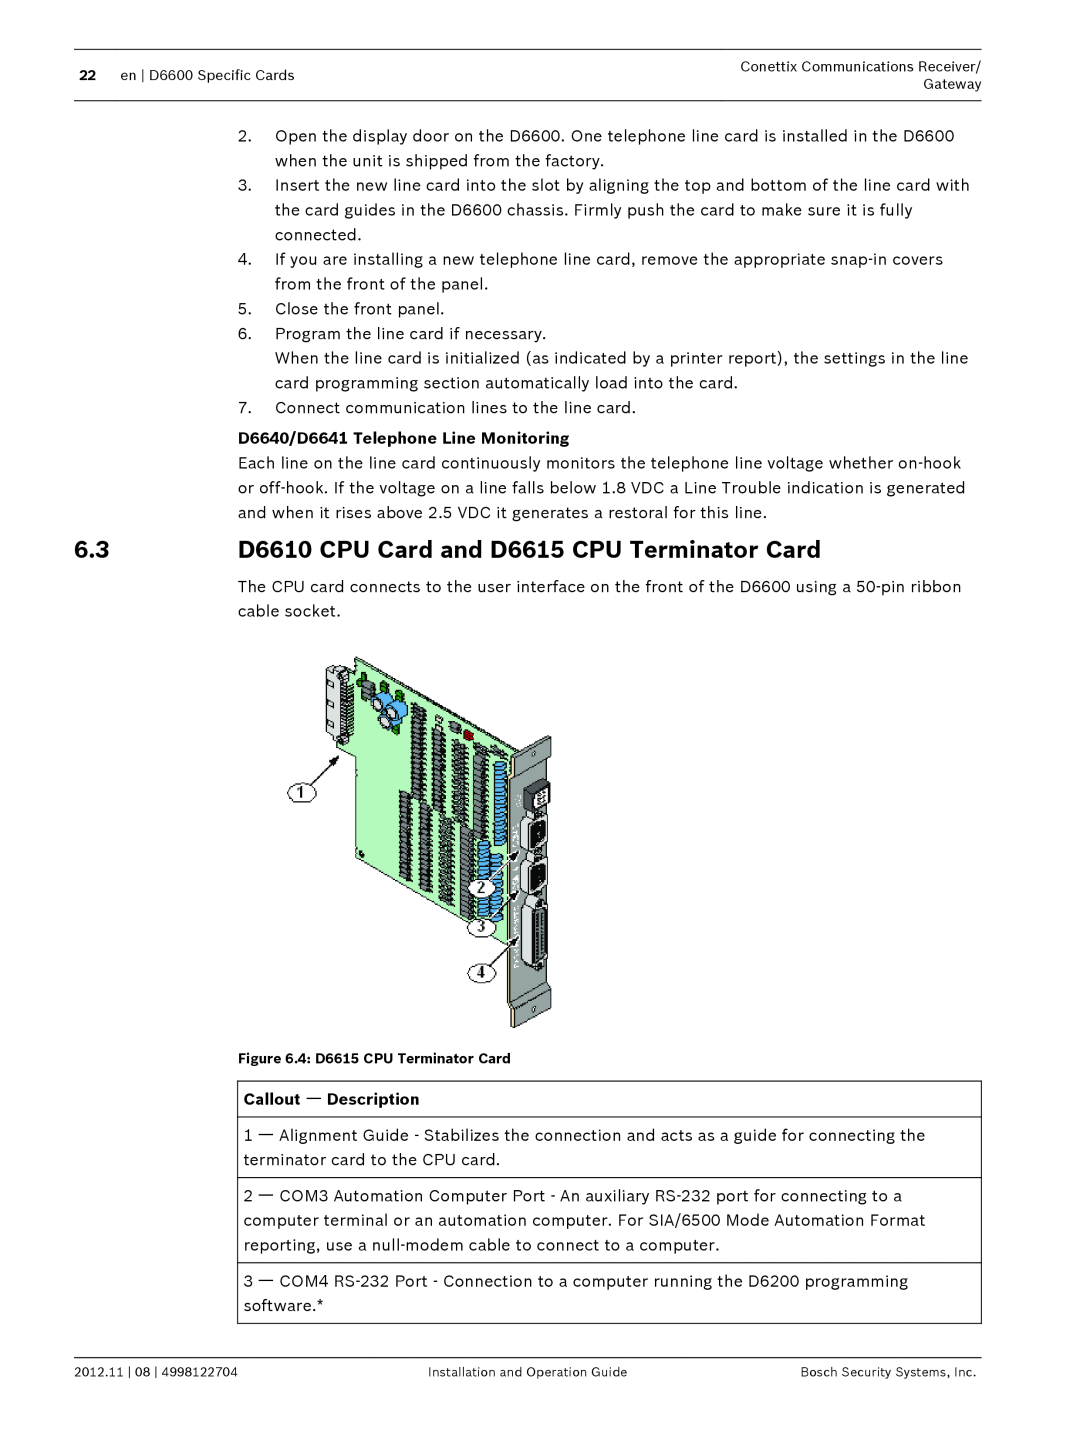 Bosch Appliances D6600 D6610 CPU Card and D6615 CPU Terminator Card, D6640/D6641 Telephone Line Monitoring 